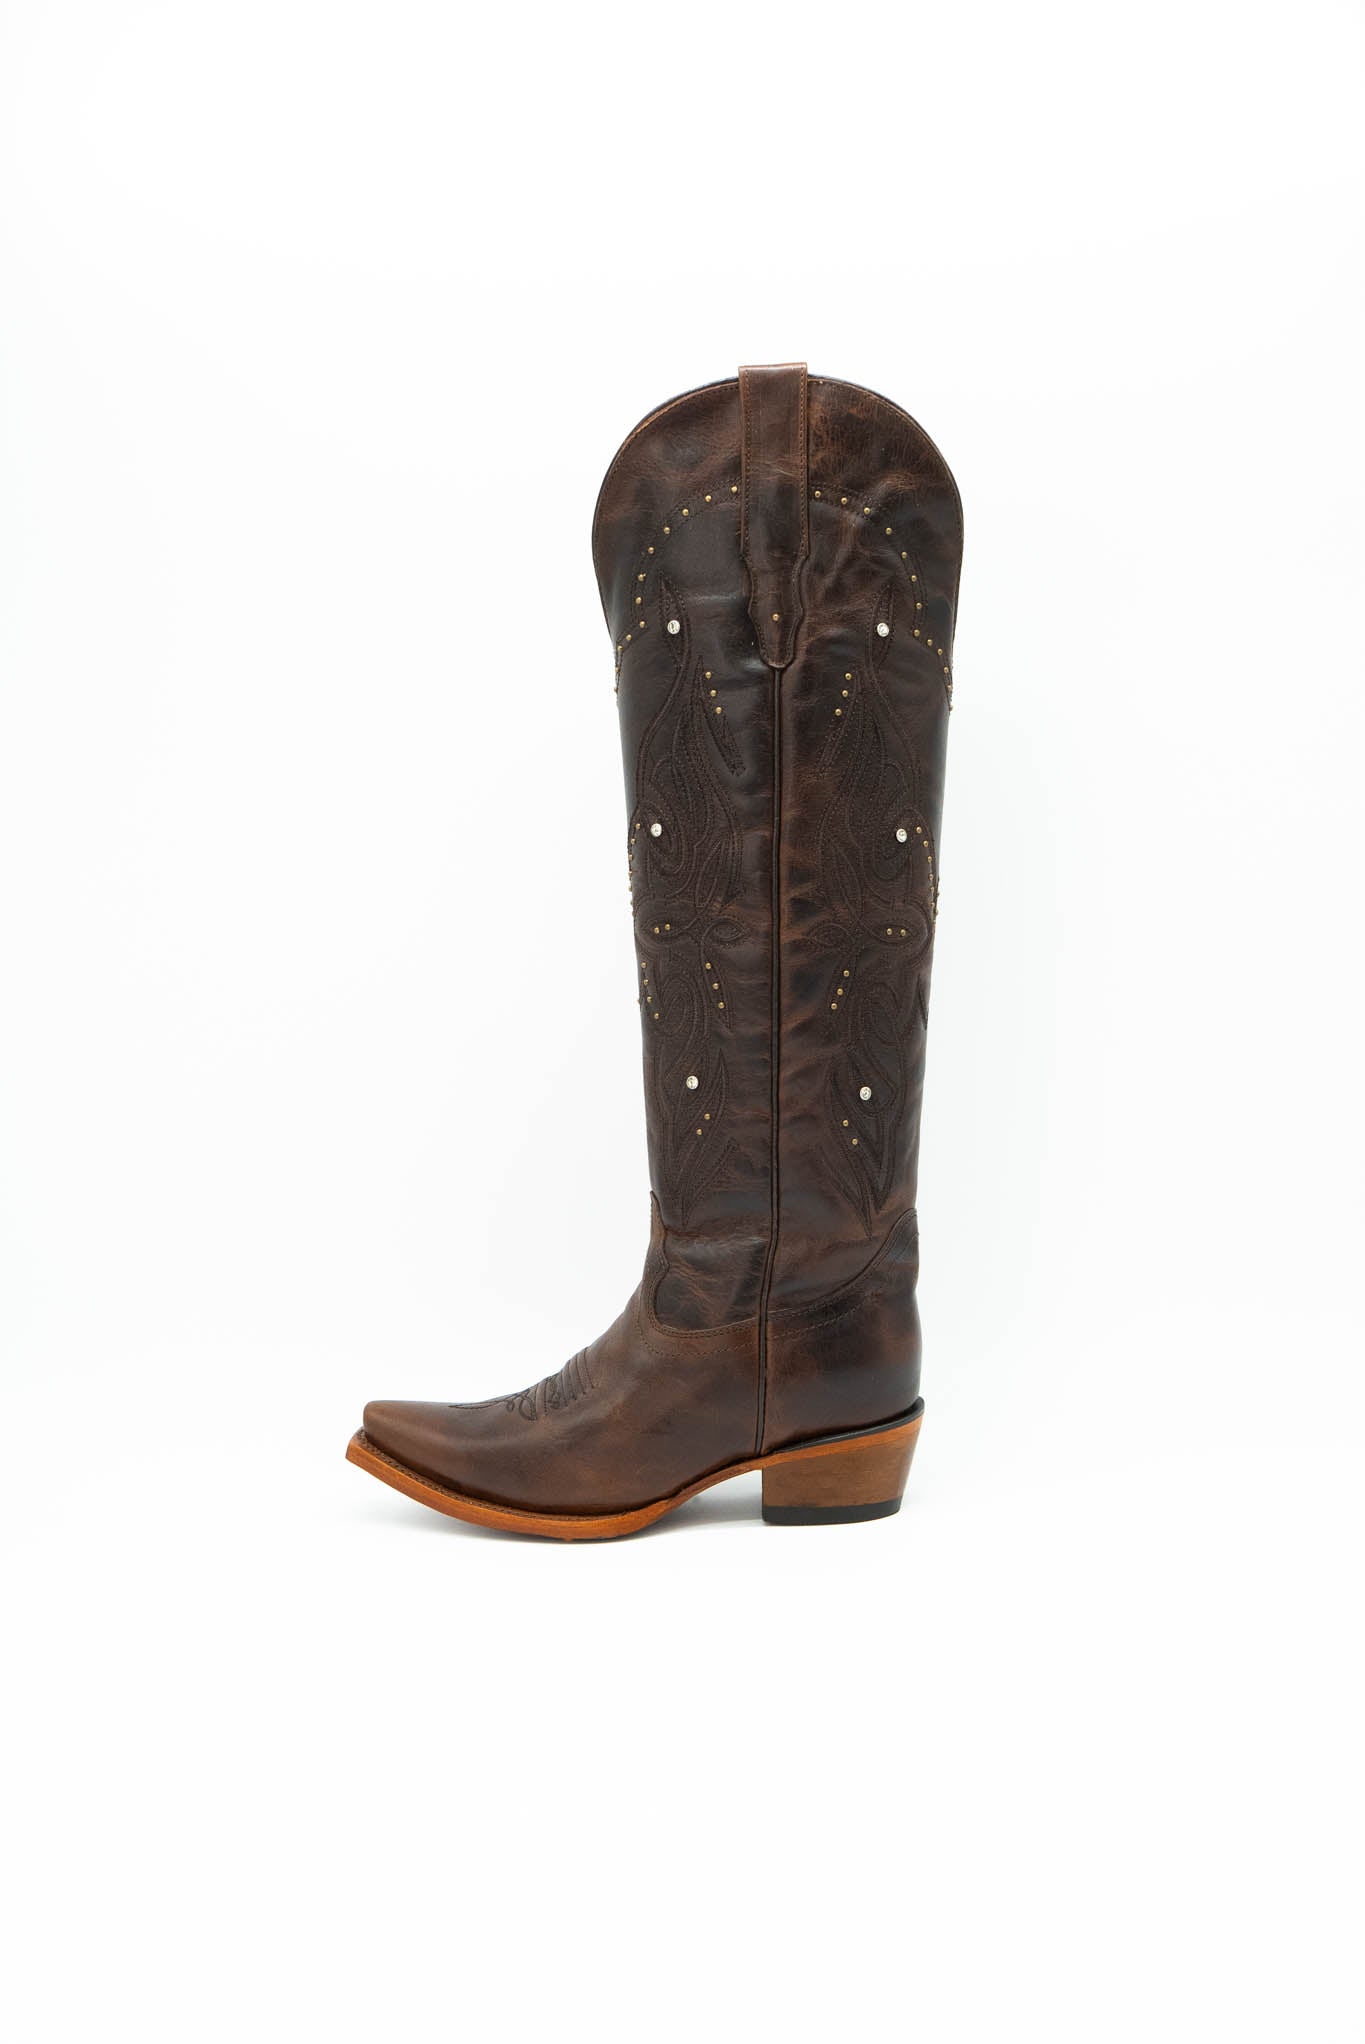 Catalina Vitro Tall Cowgirl Boot